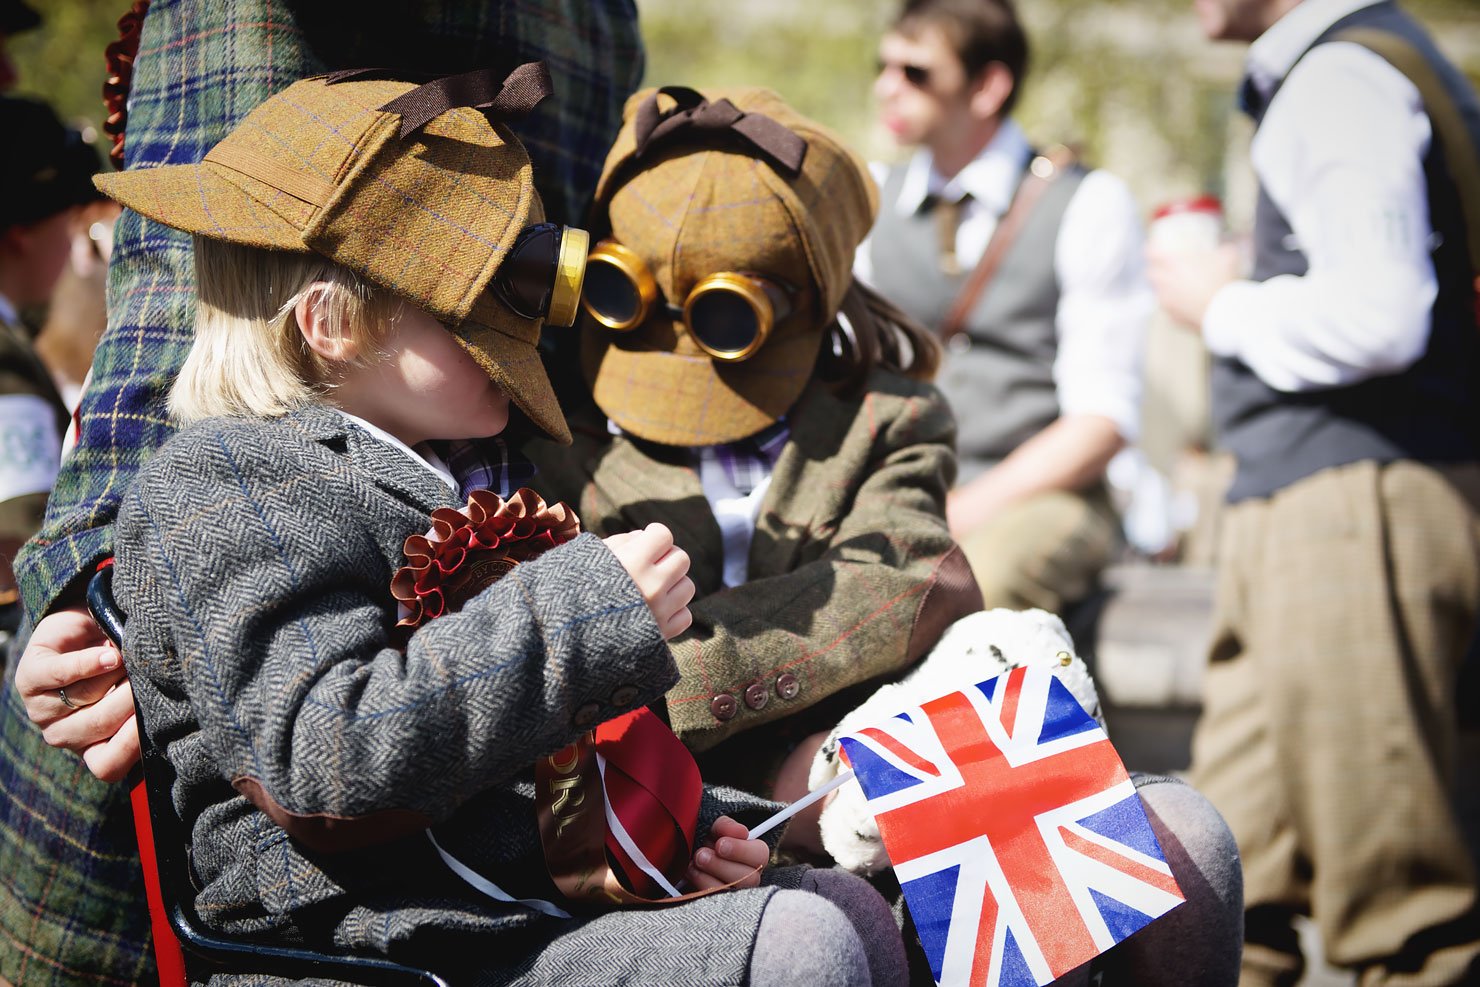 The Tweed Run London 2015: London's most stylish bike ride - Children dressed in tweed